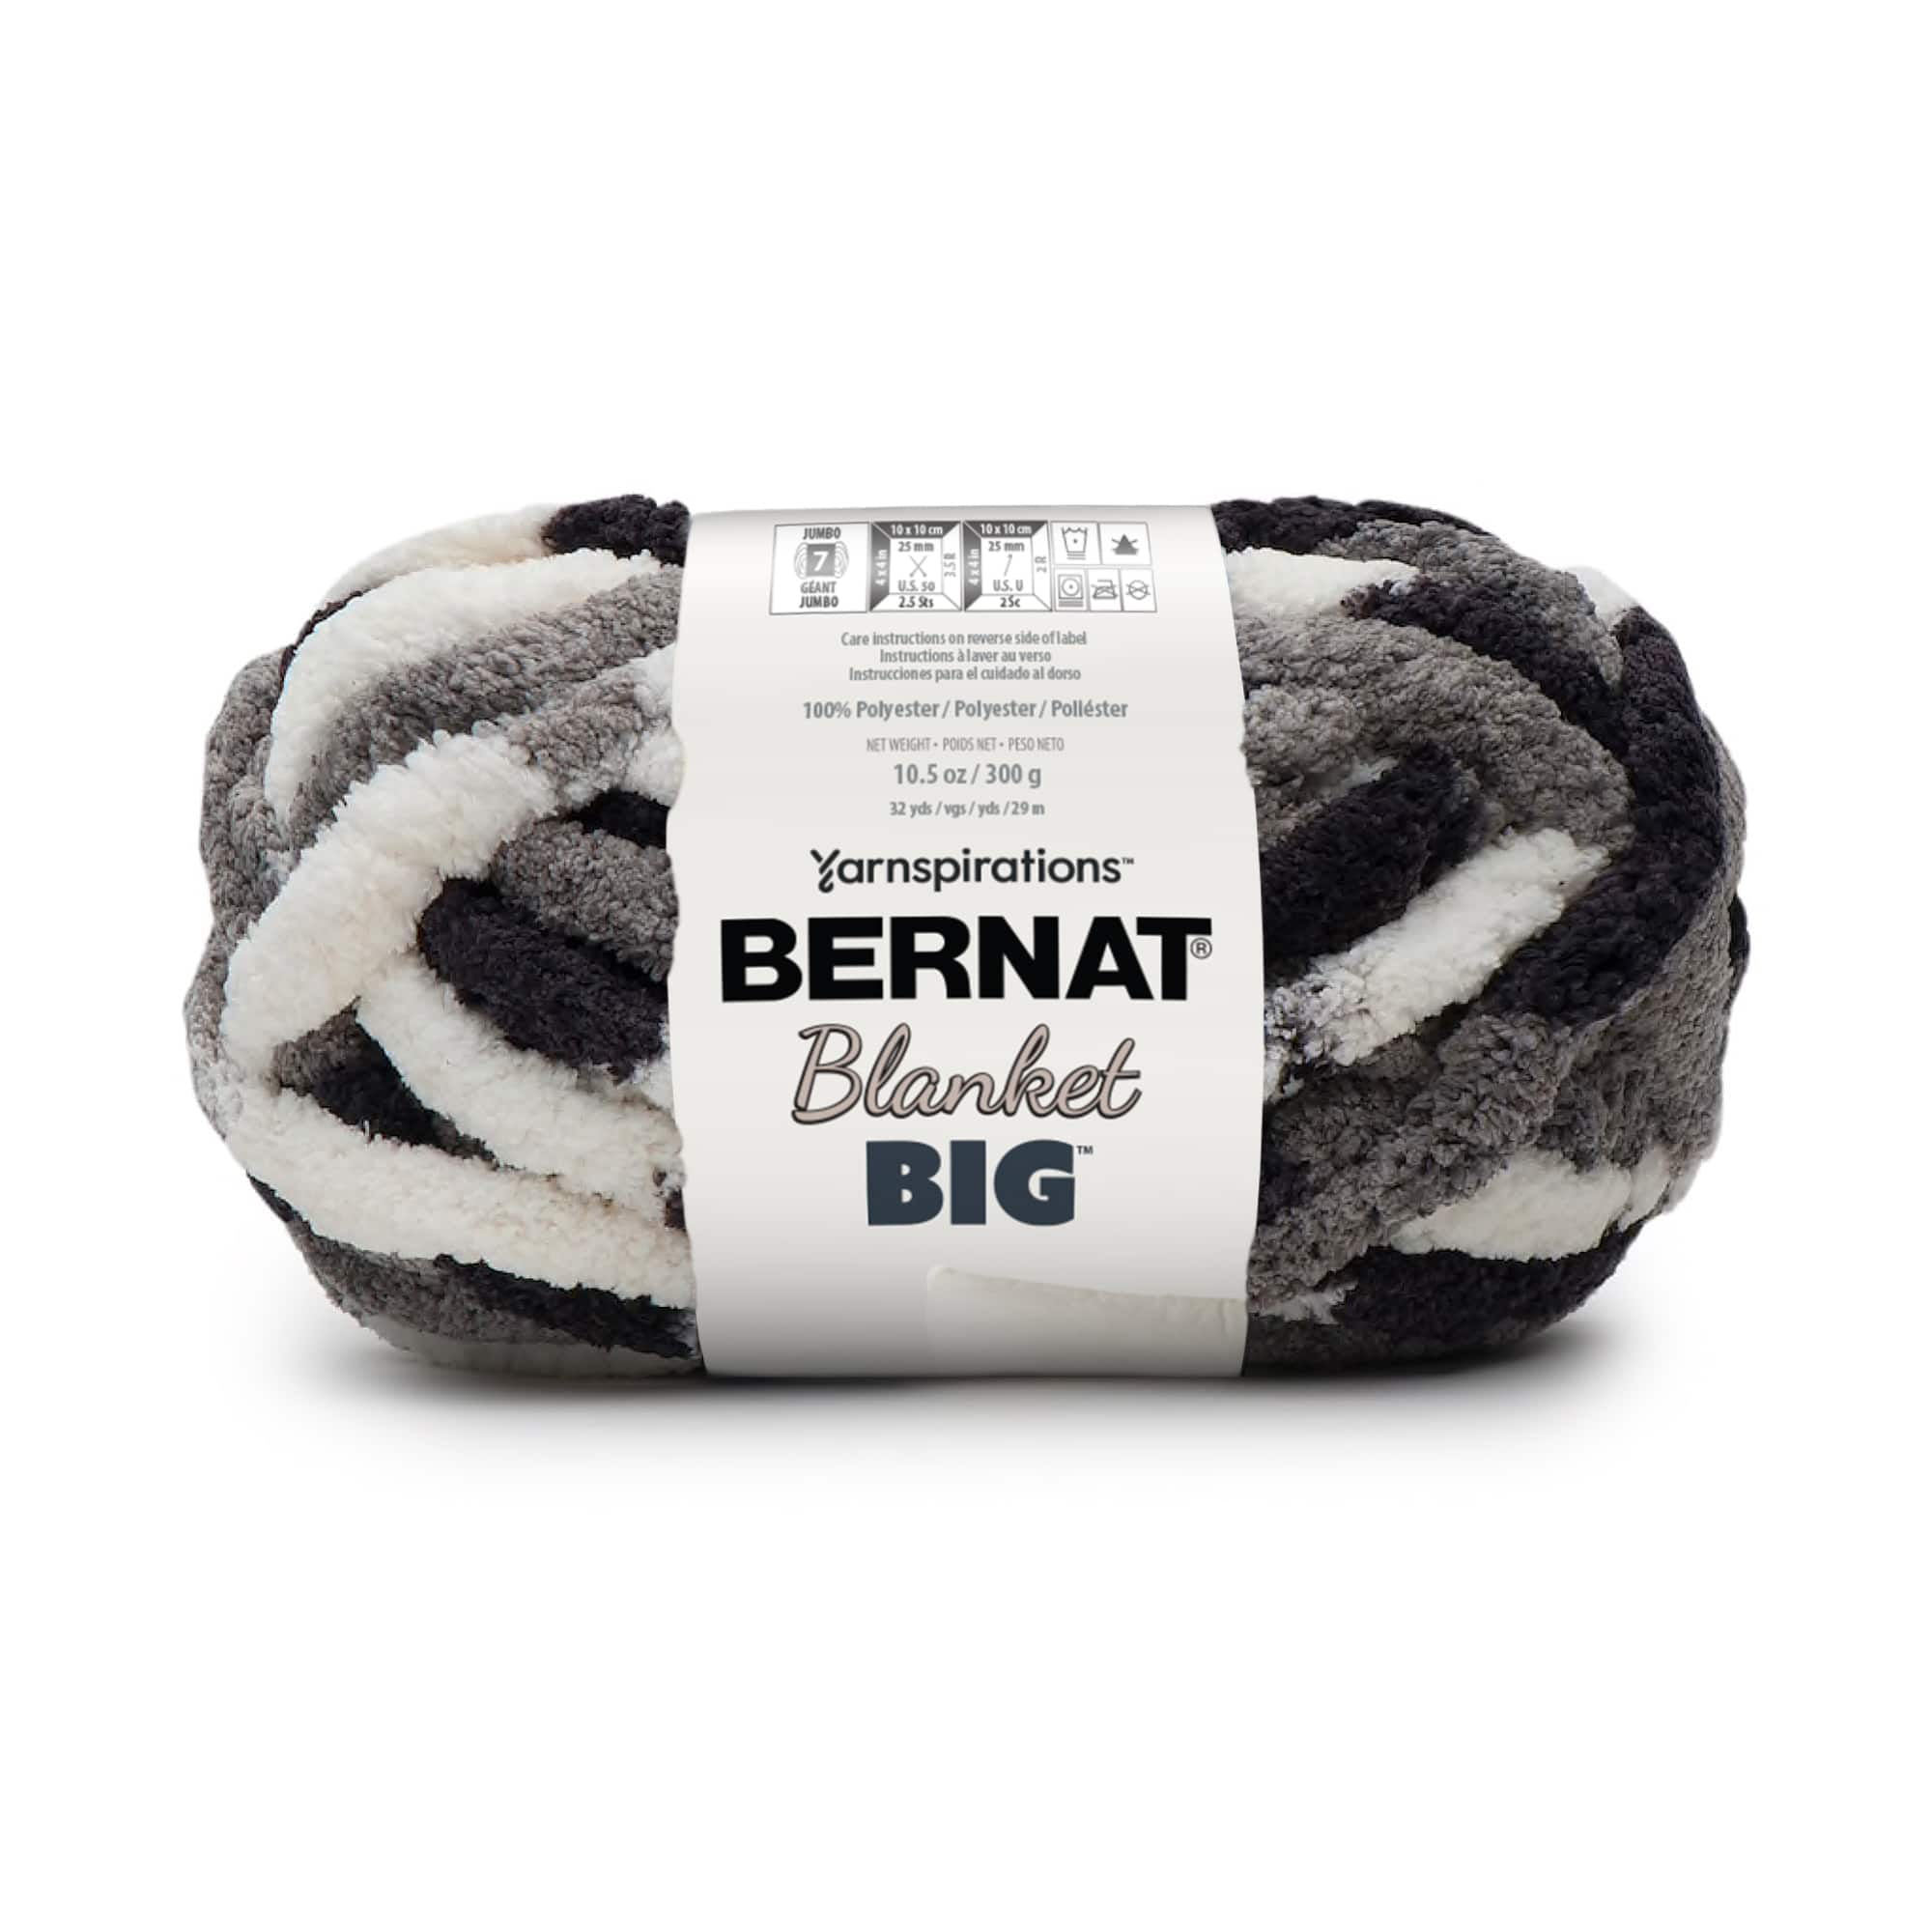 Bernat Blanket Big Yarn (300g/10.5oz),Taupe Gray